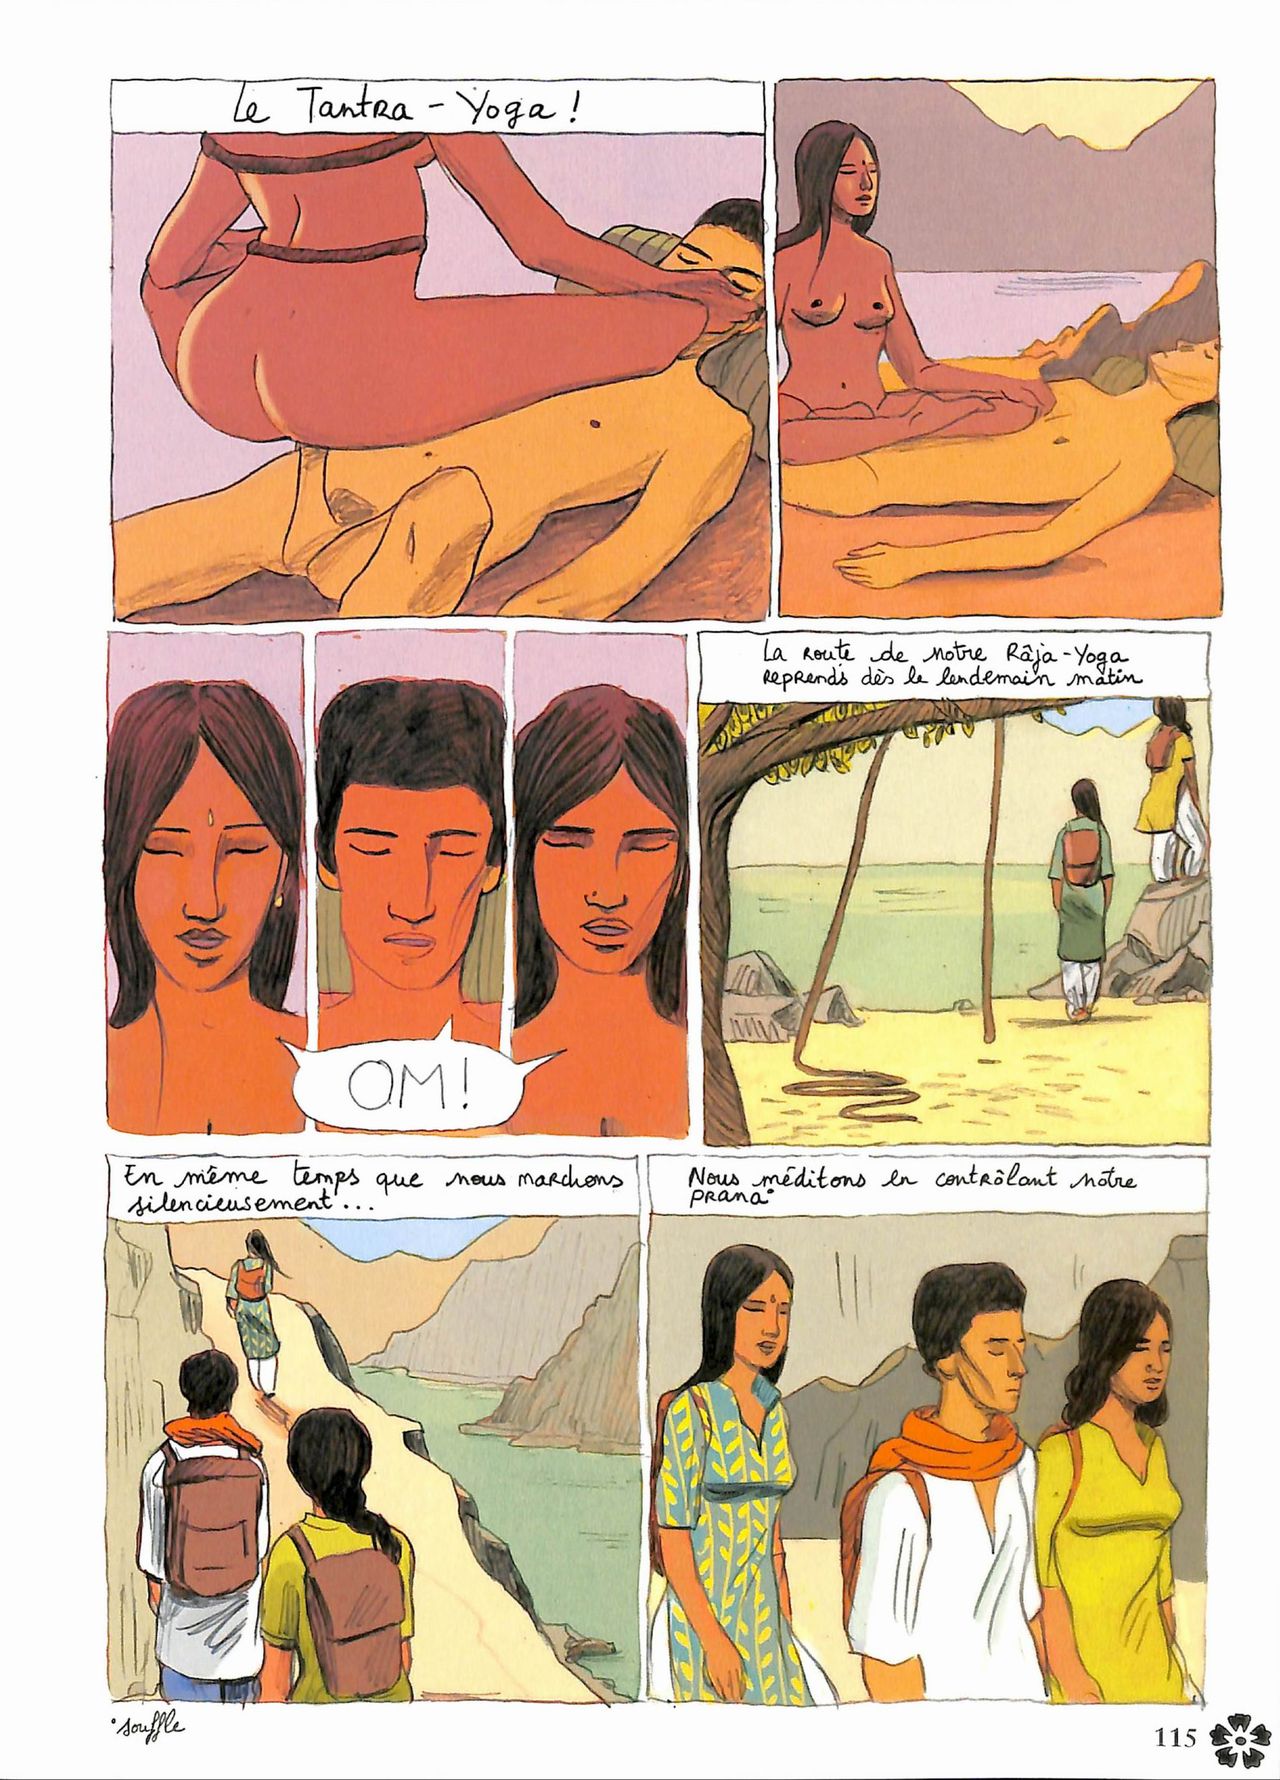 Kama Sutra en bandes dessinées - Kama Sutra with Comics numero d'image 115